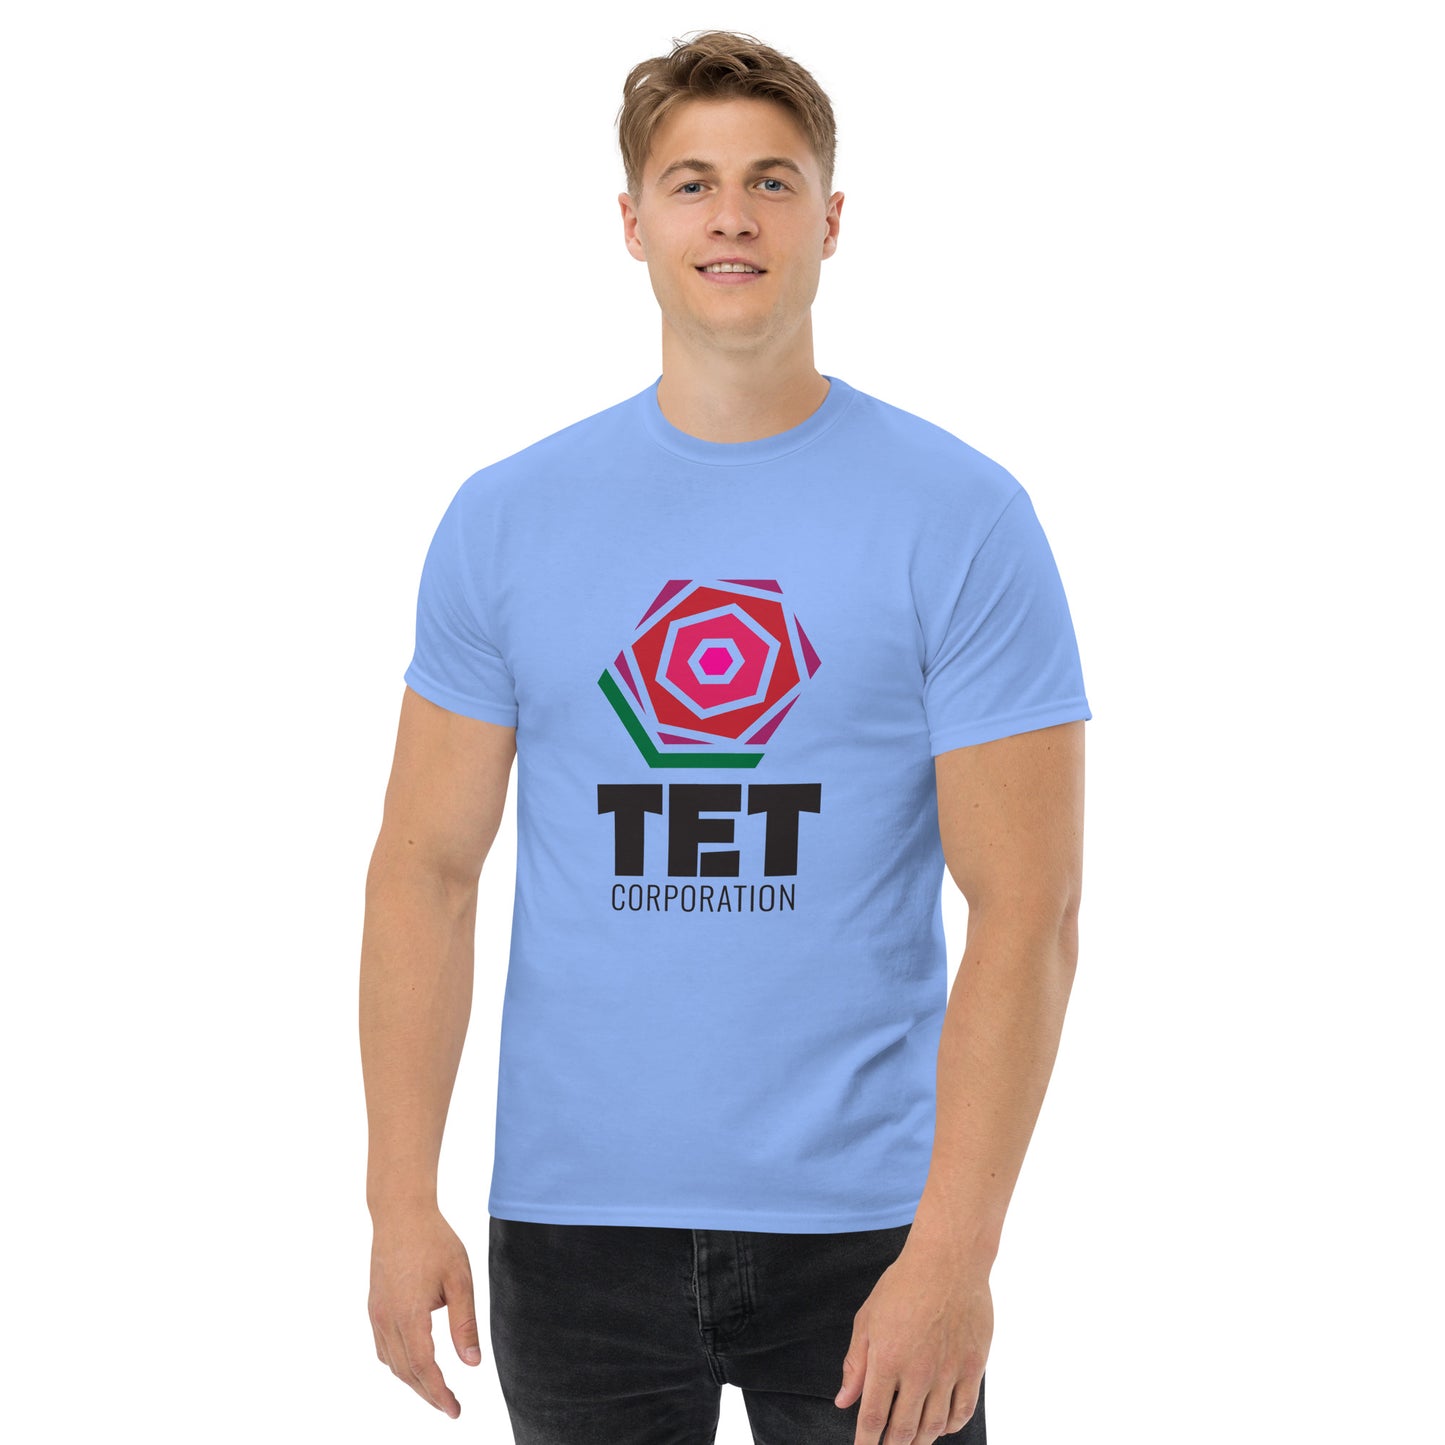 Tet Corporation T-Shirt, Black Logo, Classic Fit